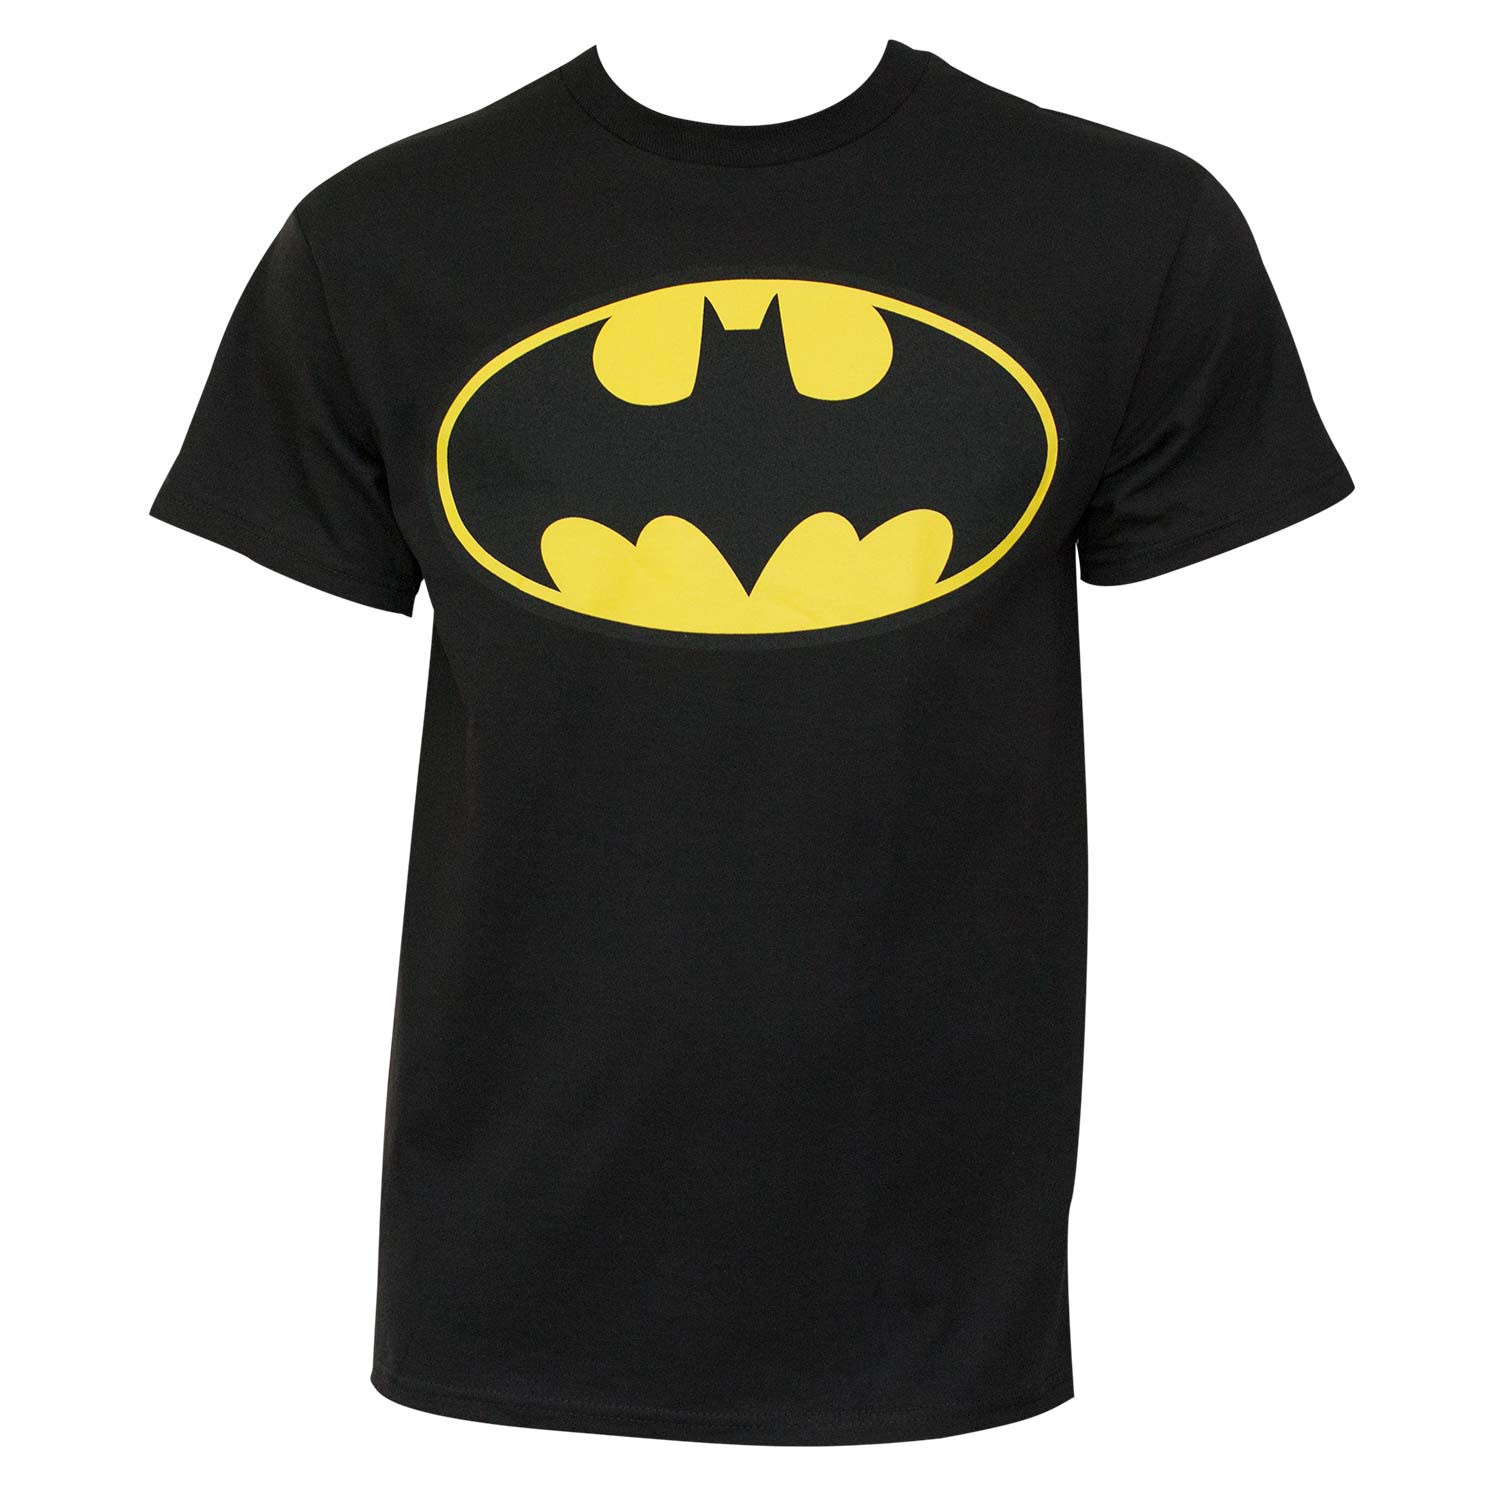 Batman Classic Yellow Bat Logo Graphic Men's Black T-Shirt